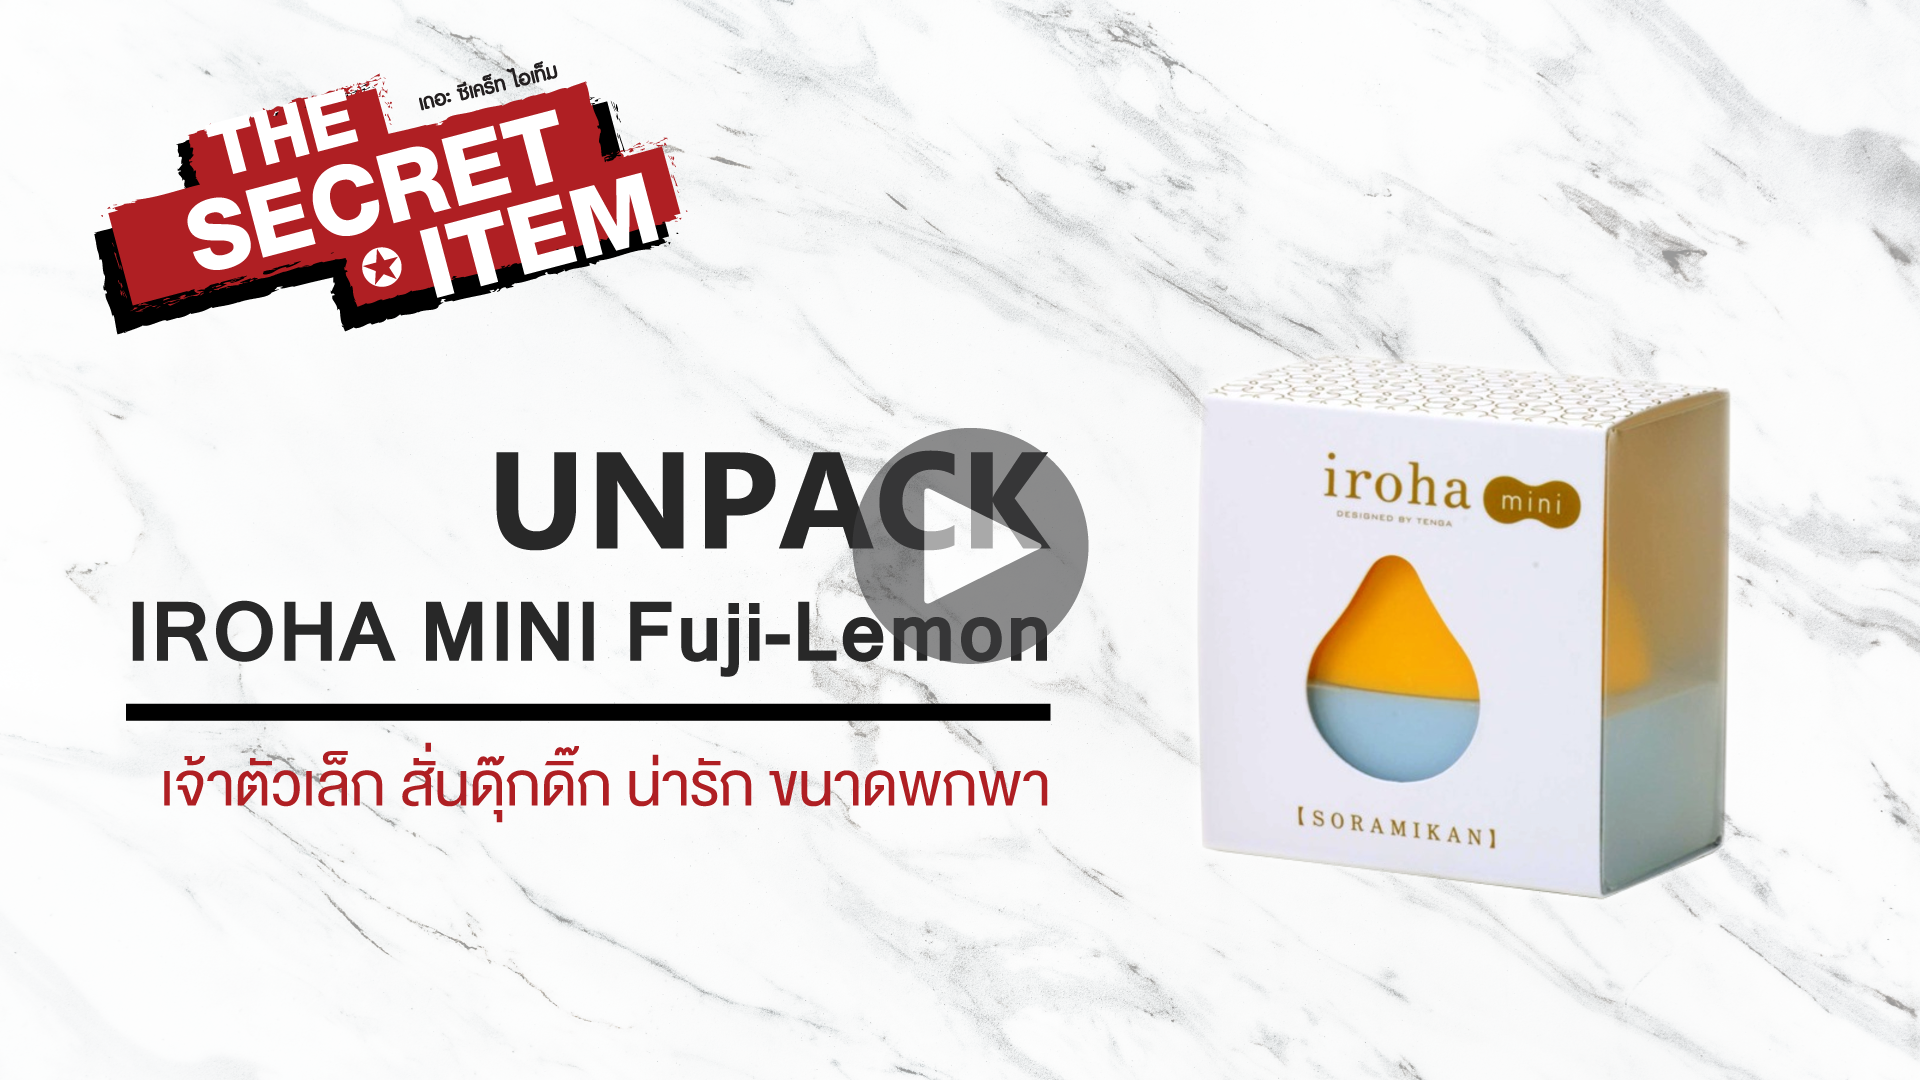 THE SECRET ITEM - Unpack | แกะกล่อง IROHA MINI (Fuji-Lemon) ของเล่นตัวจิ๋ว